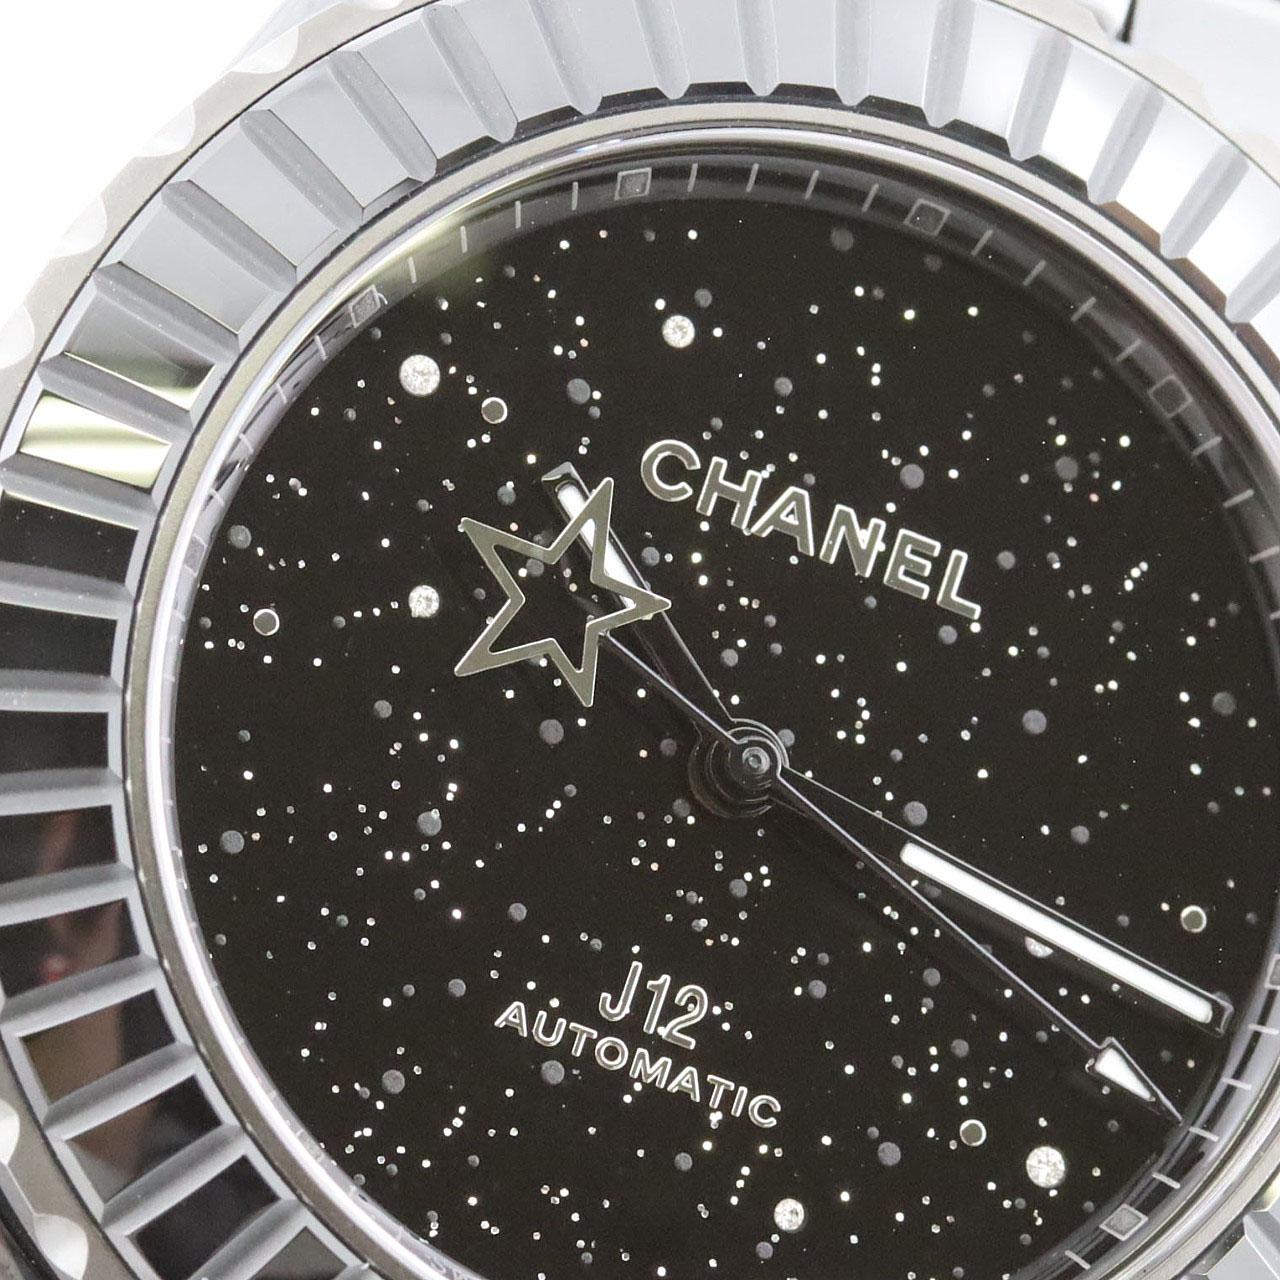 [BRAND NEW] CHANEL J12 Interstellar Caliber 12.1 38mm LIMITED H7989 Ceramic Automatic